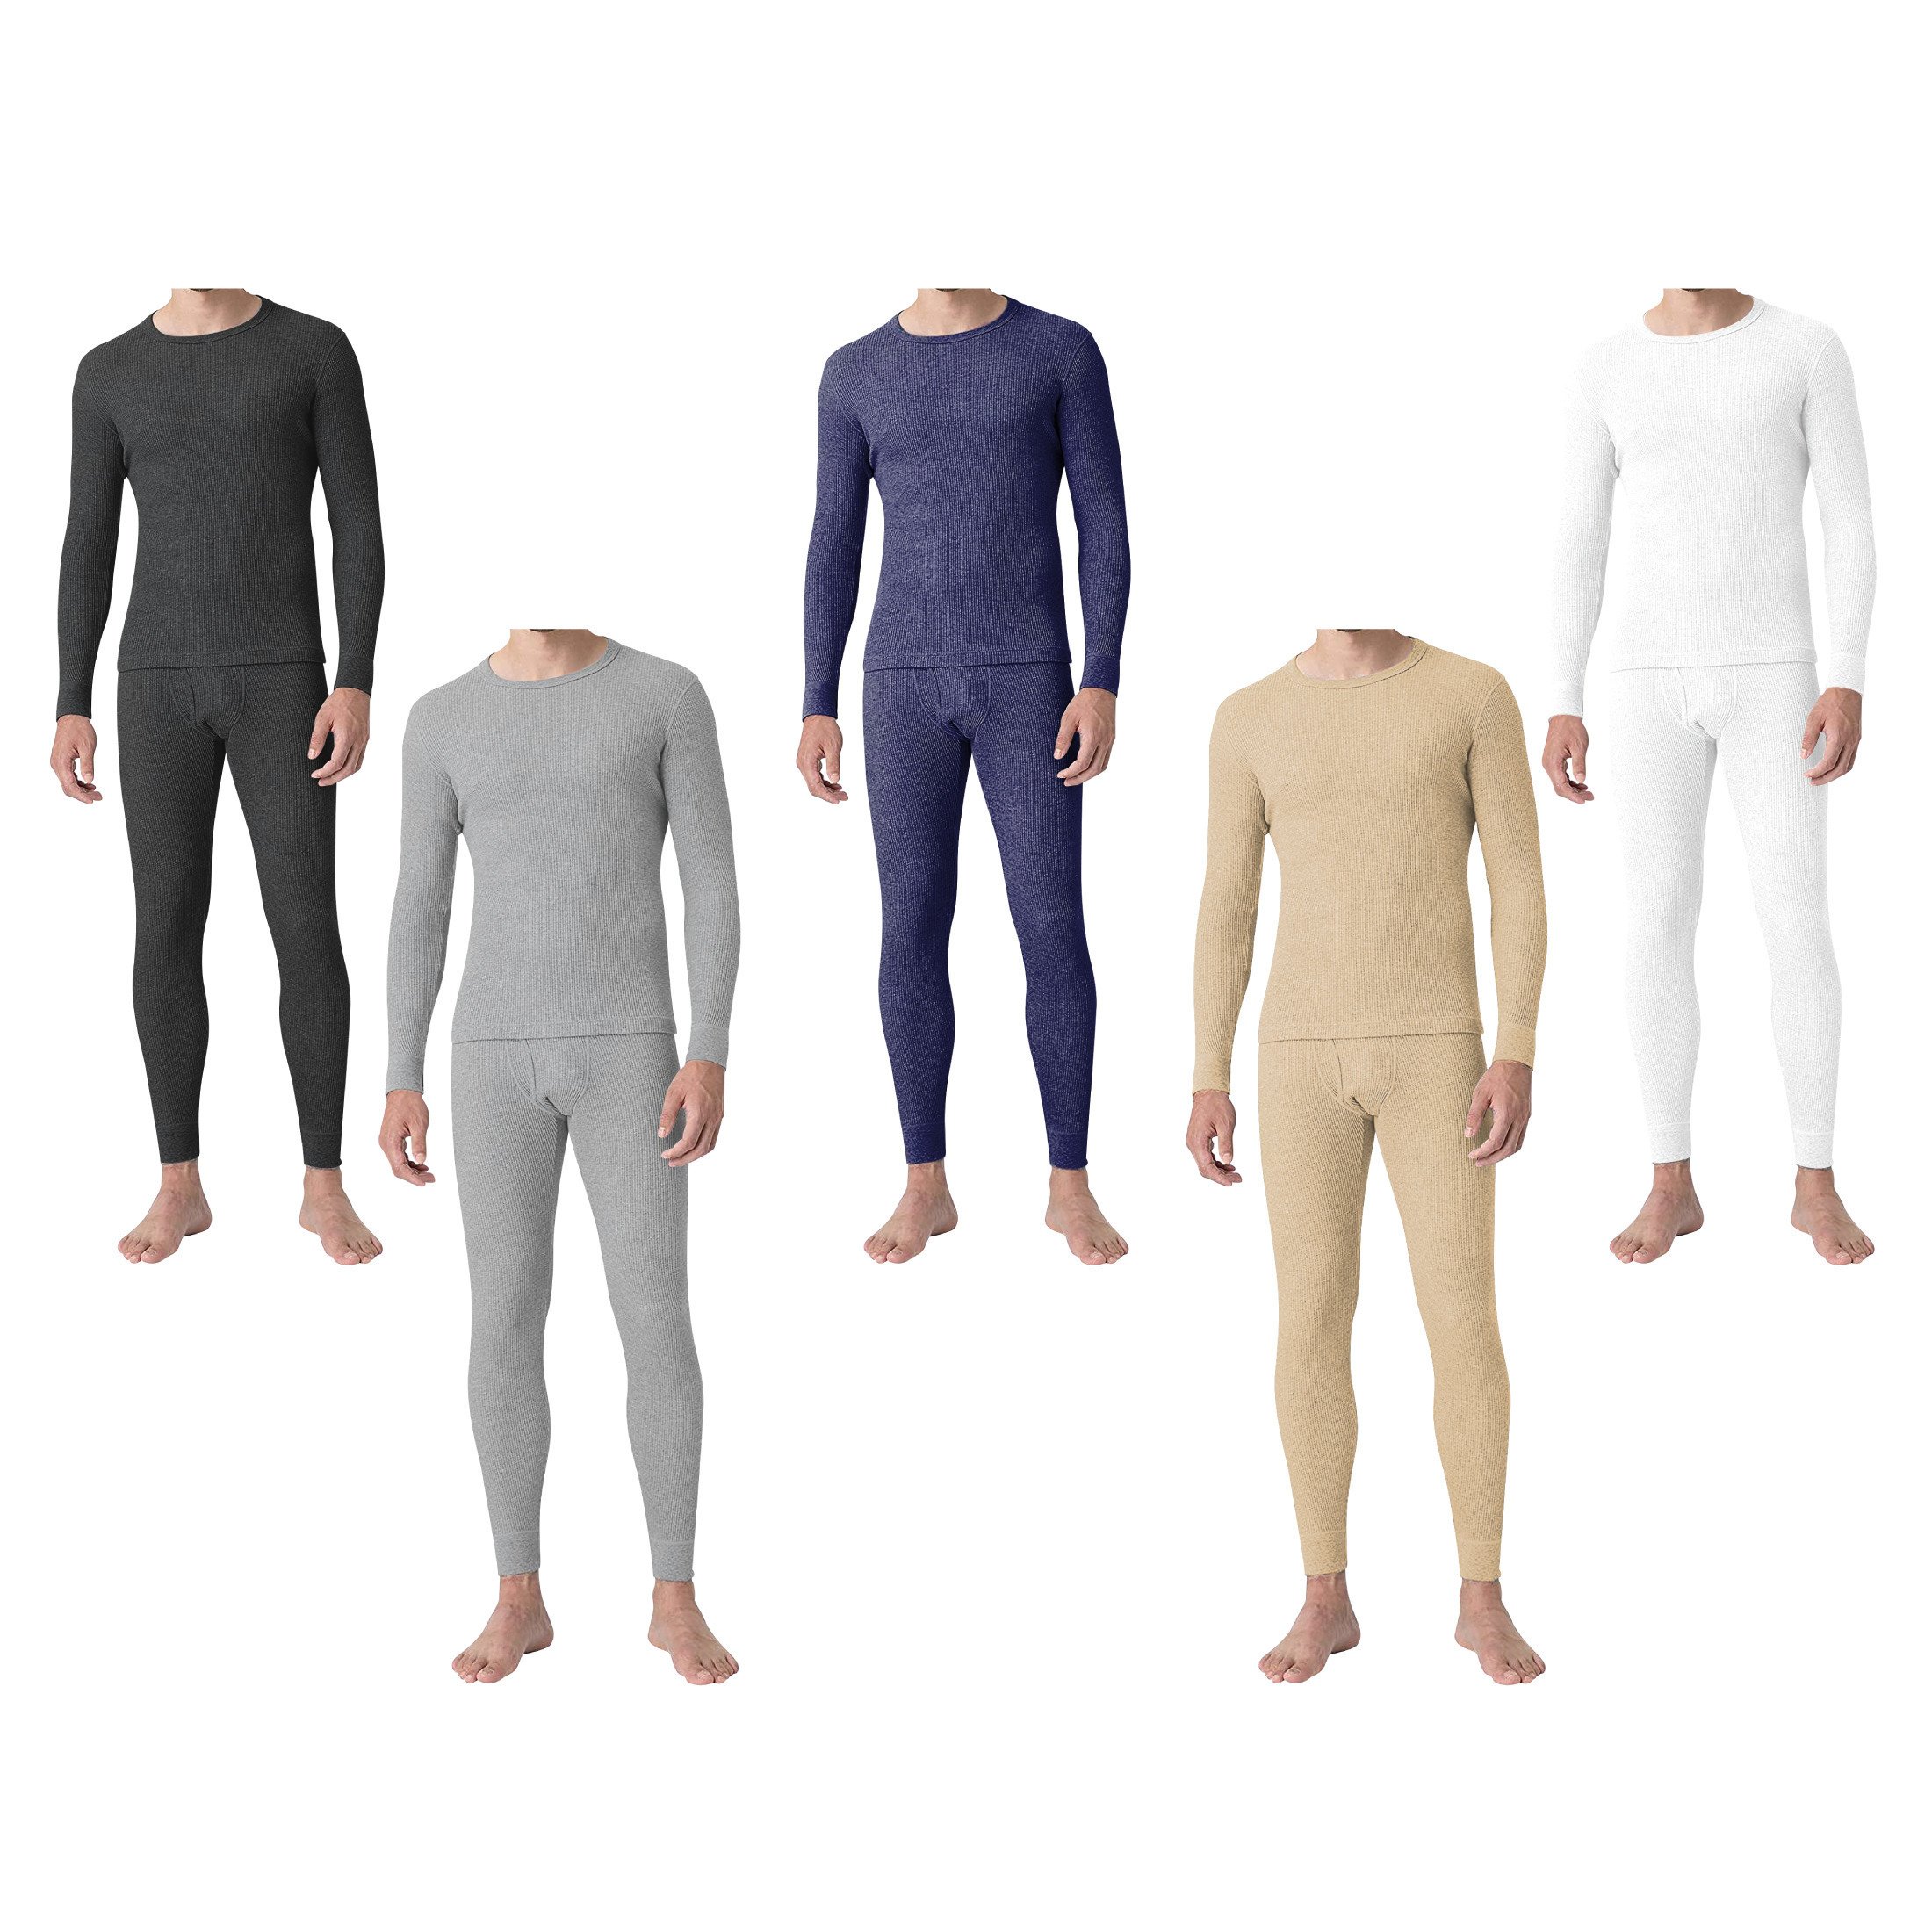 2-Sets: Men's Super Soft Cotton Waffle Knit Winter Thermal Underwear Set - Black & Grey, X-Large